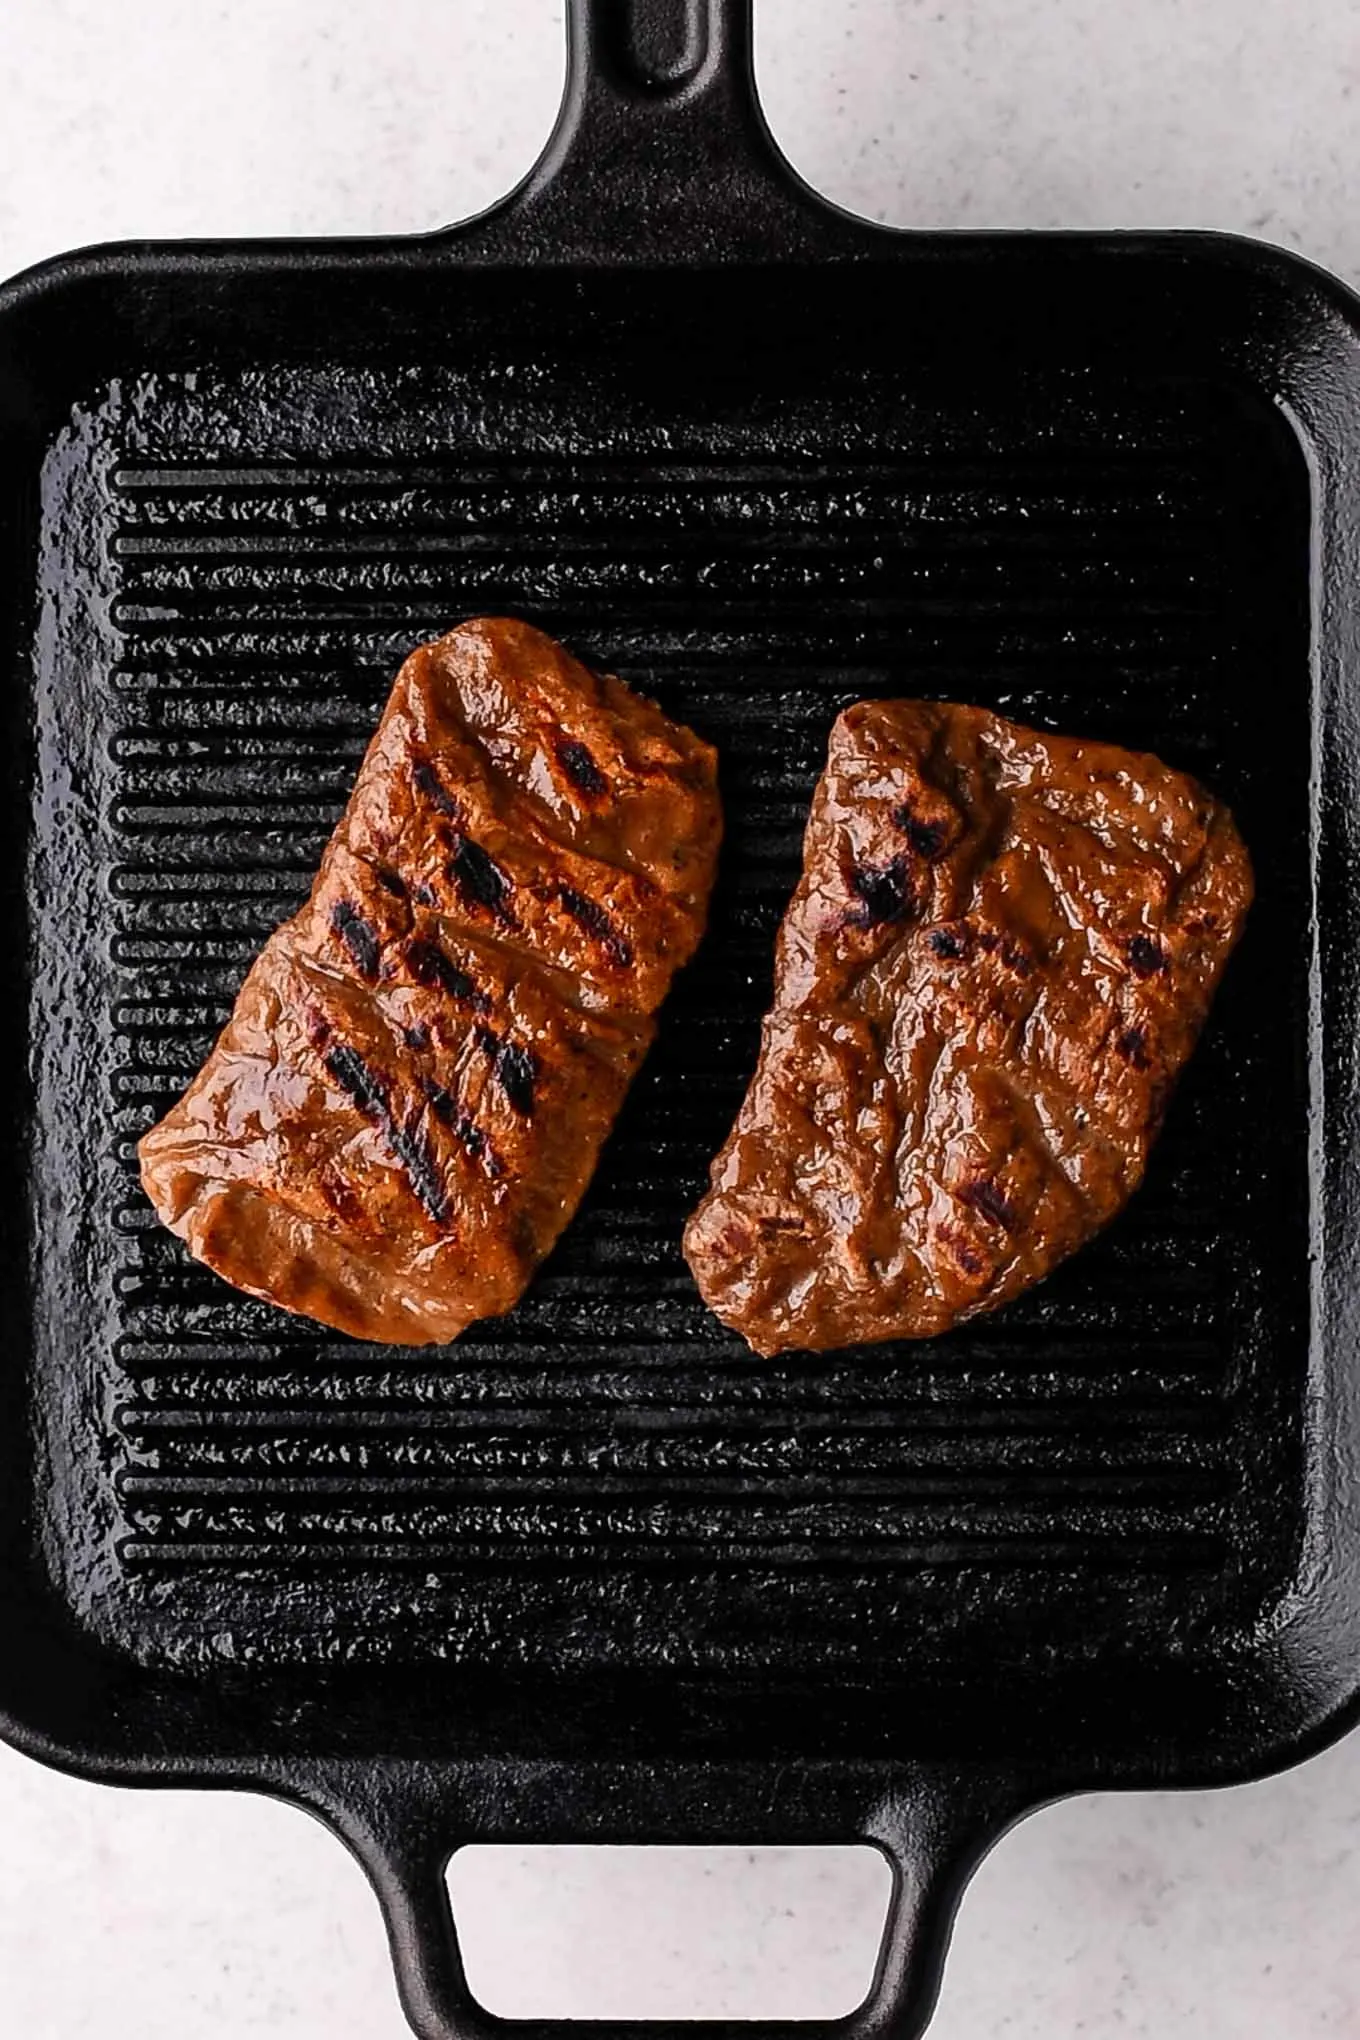 two seitan steaks on grill